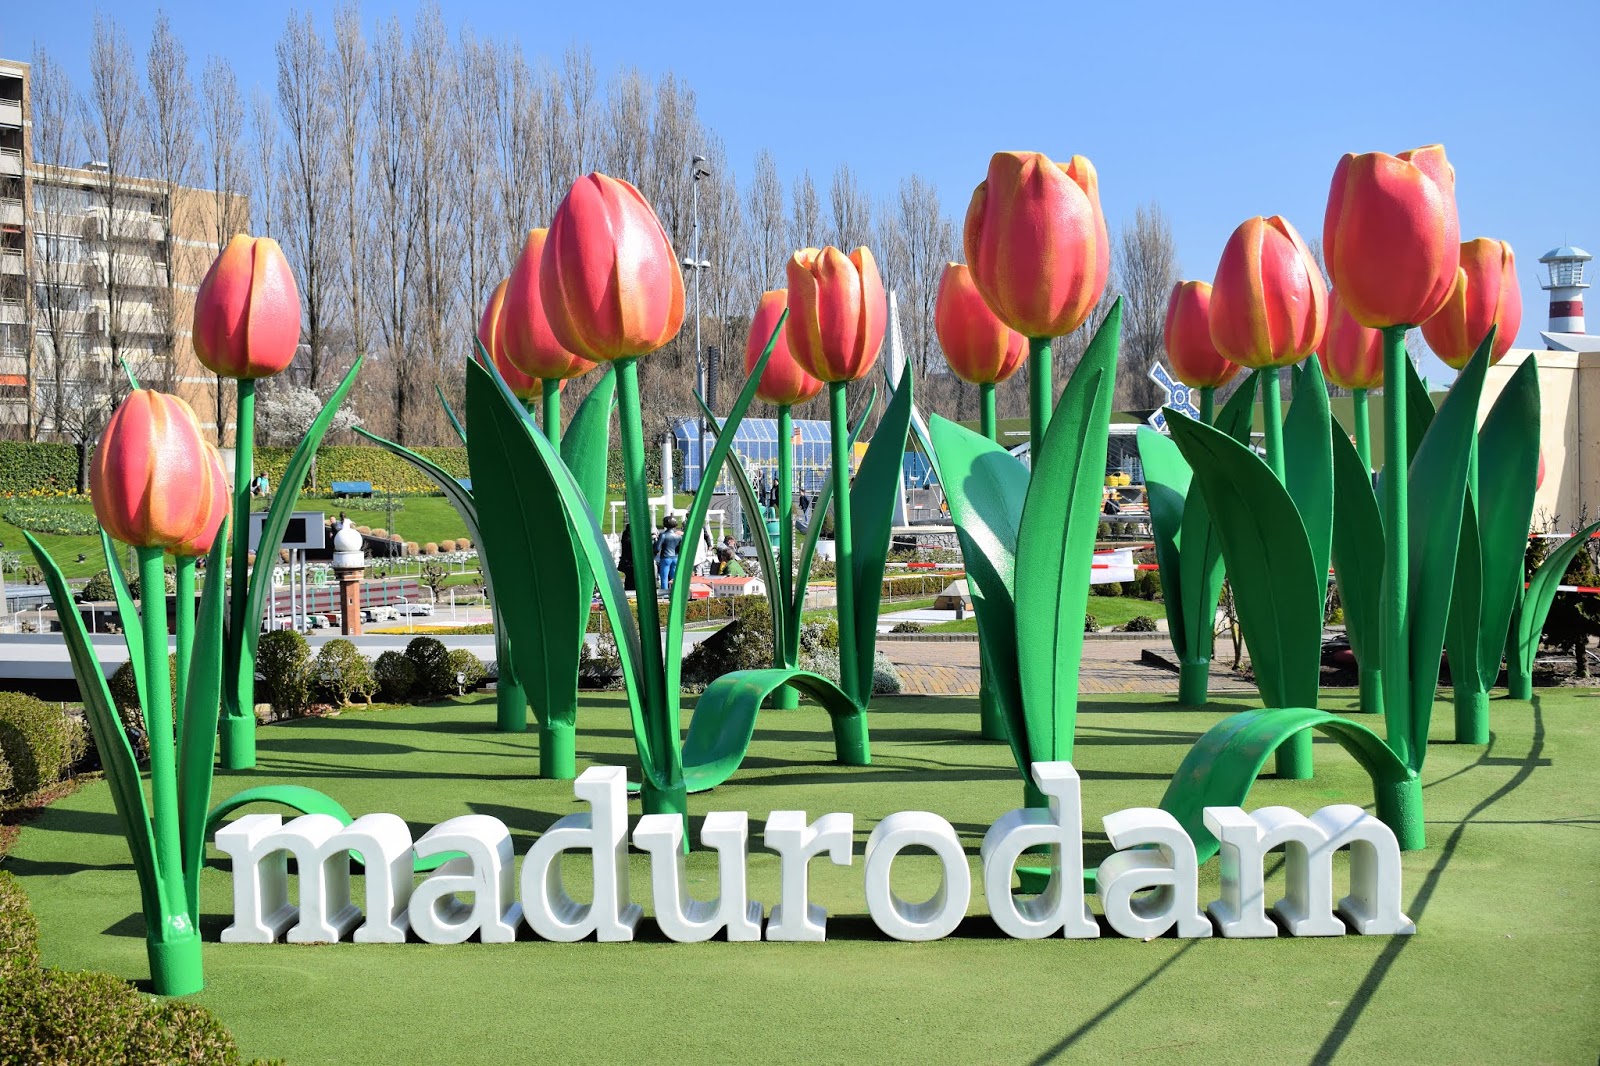 Madurodam & Den Haag day trip from Amsterdam